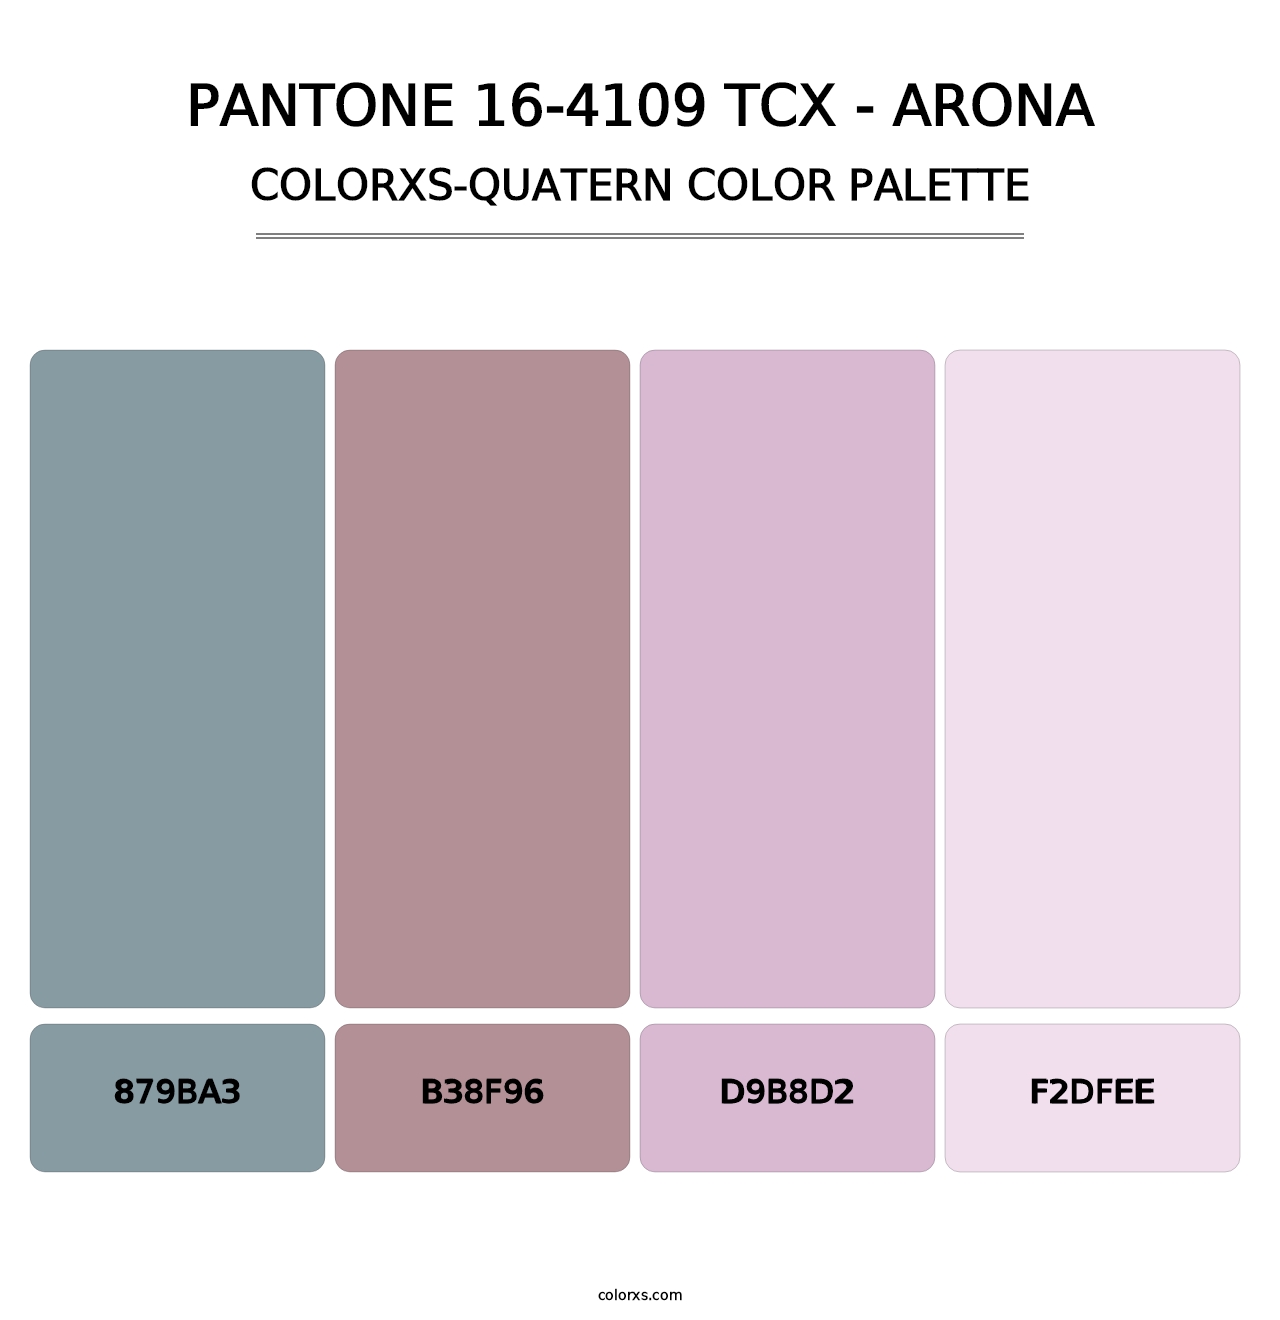 PANTONE 16-4109 TCX - Arona - Colorxs Quatern Palette